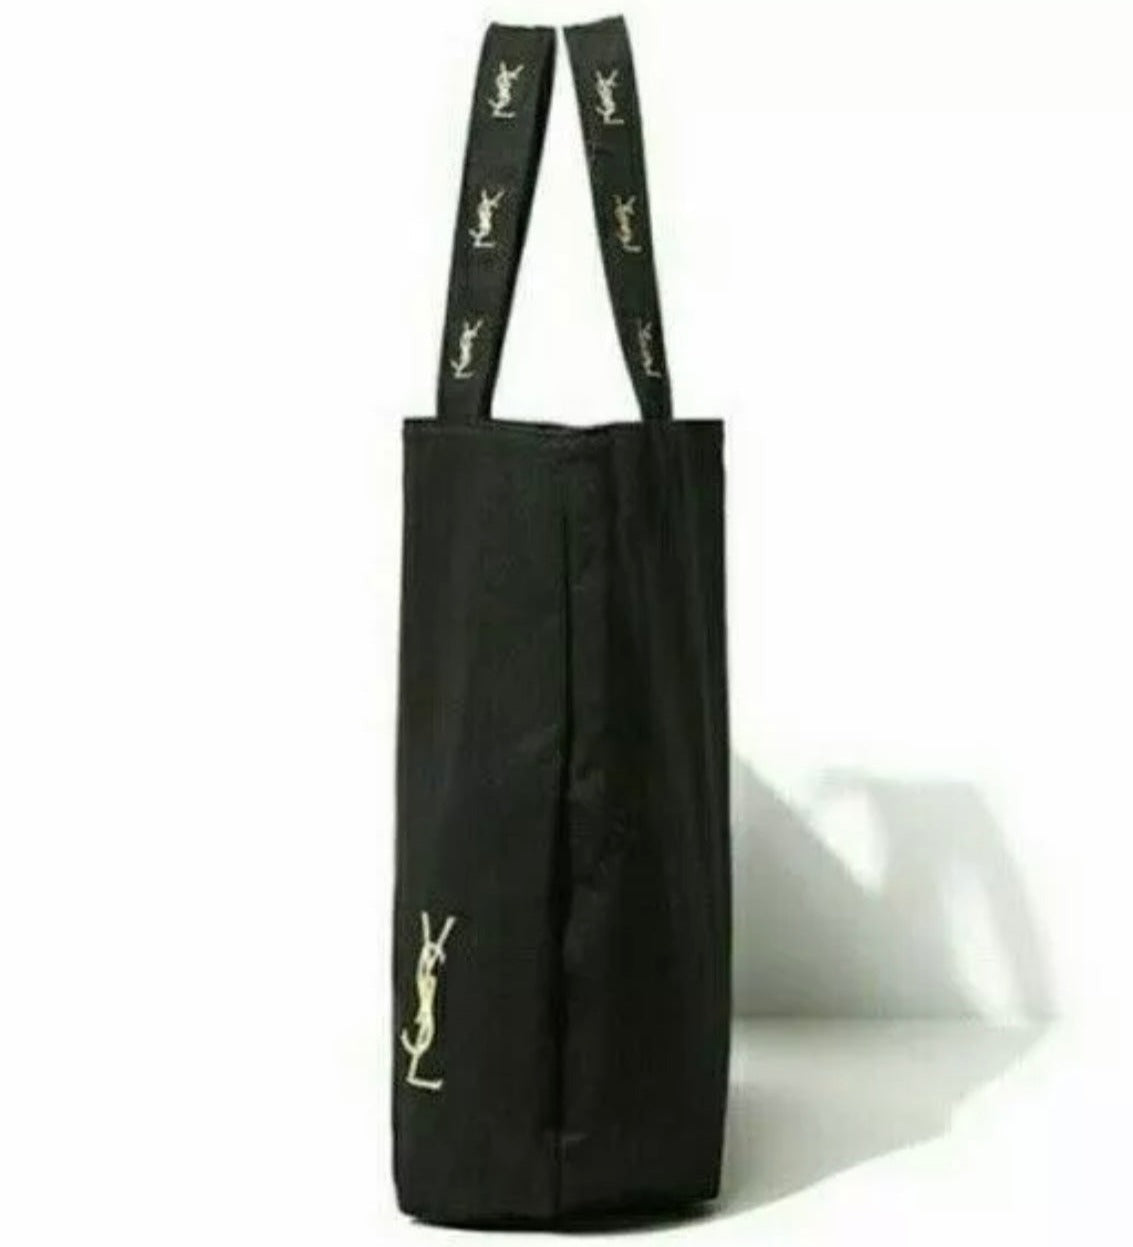 Yves Saint Laurent Tote Bag Black Pink inner gift novelty gift bag black  canvas